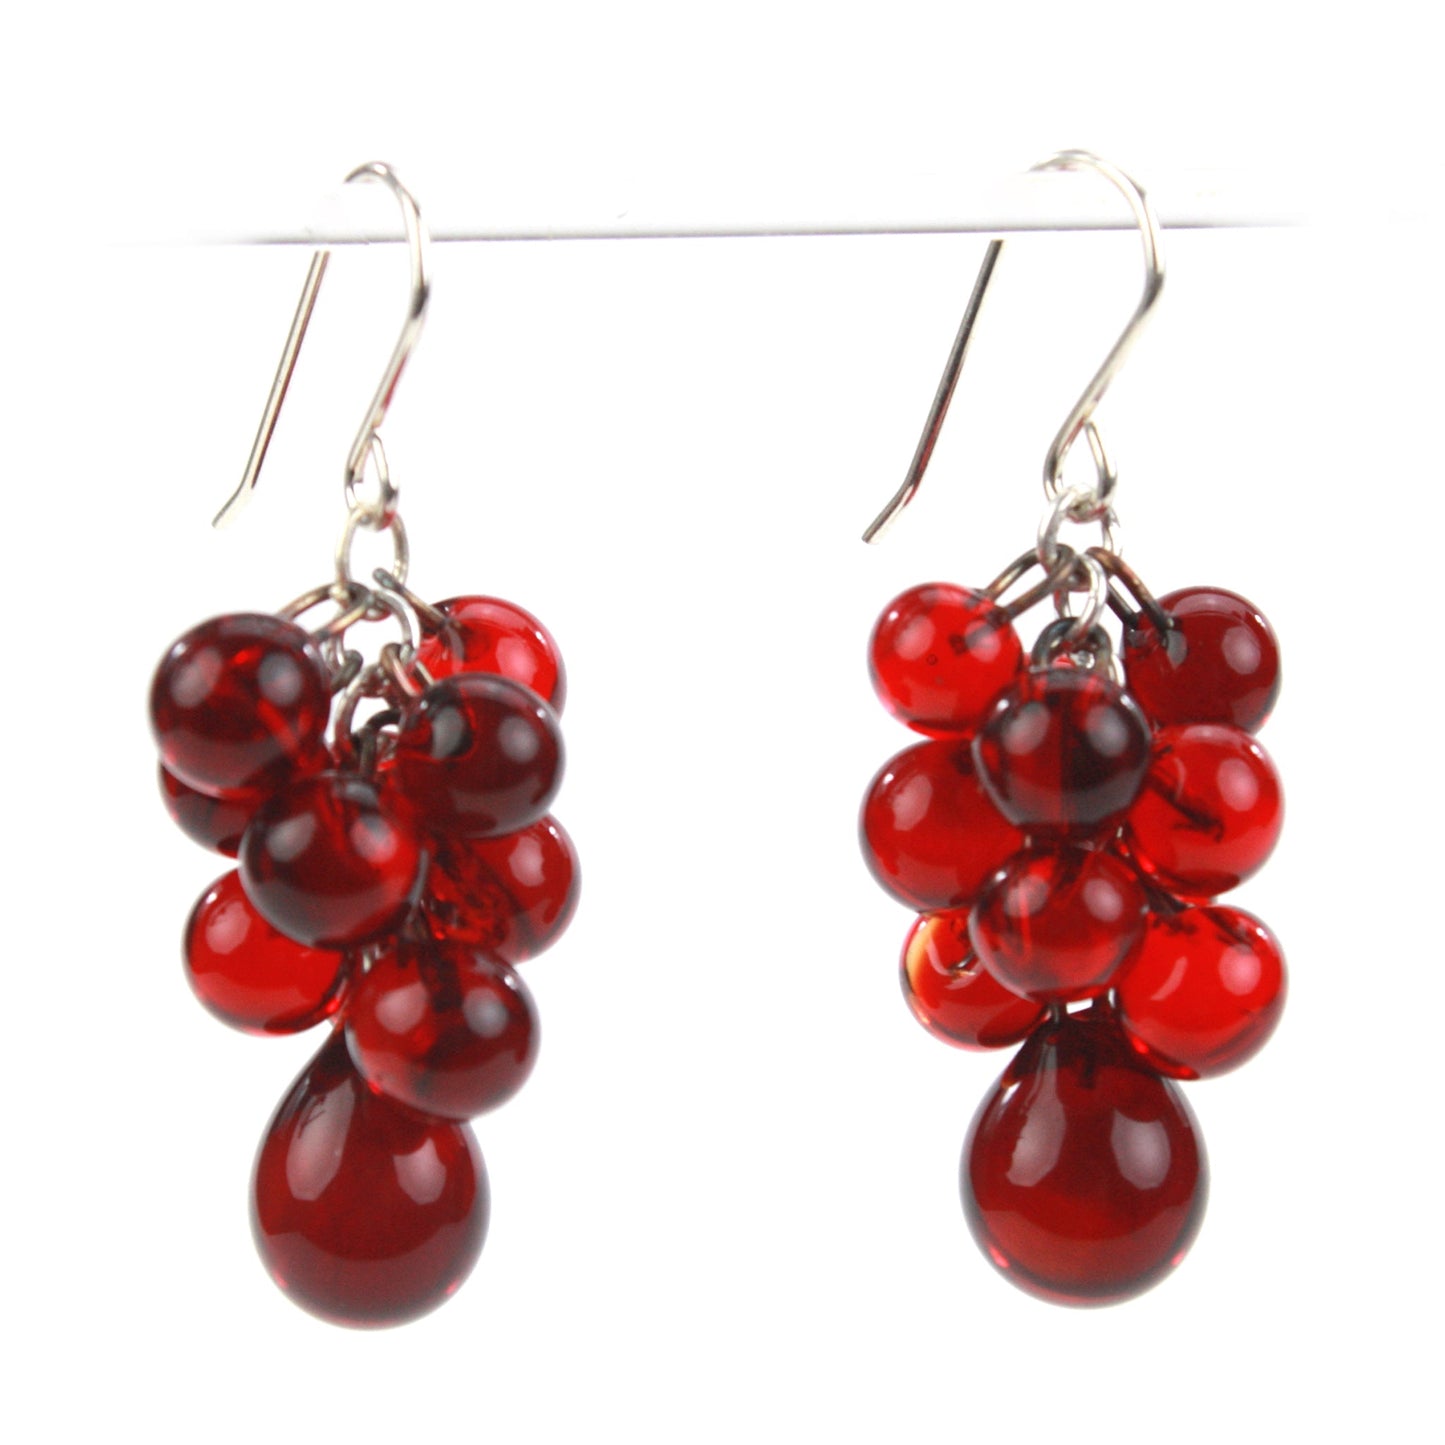 Chroma Earrings in Red